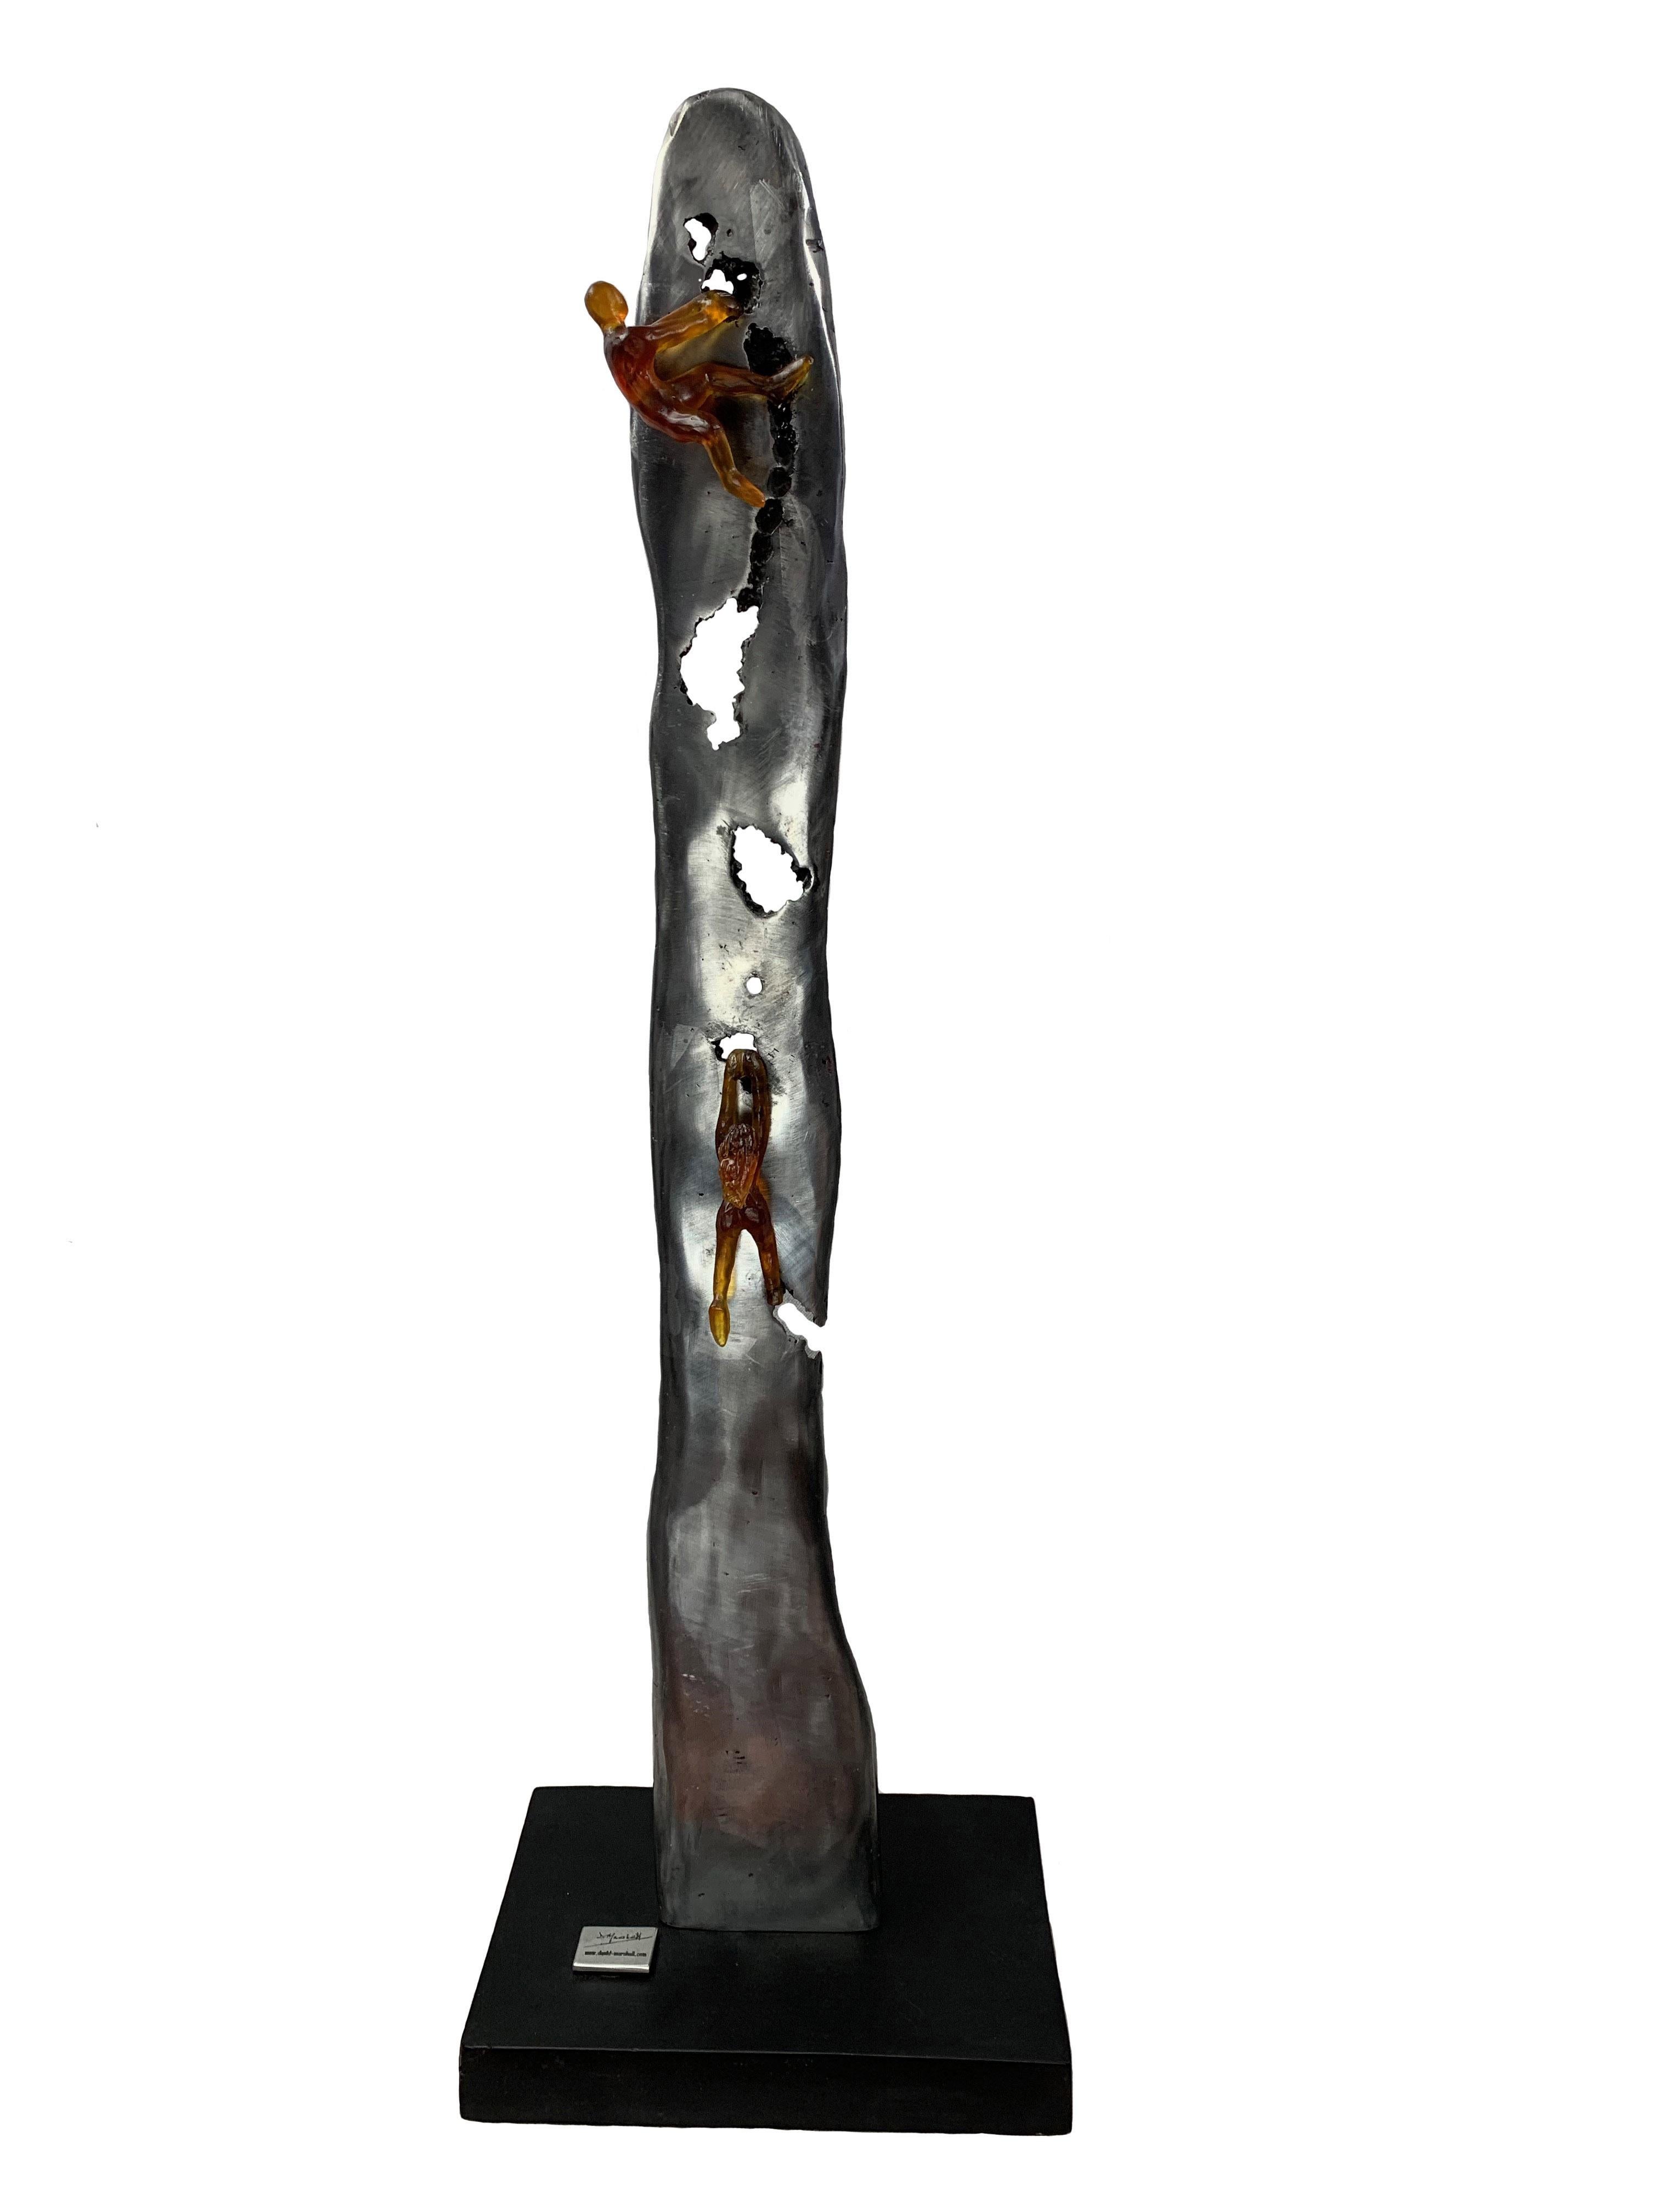 David Marshall Jennifer Baker "The Crux" Figurative Modern Sculpture Metal Glass